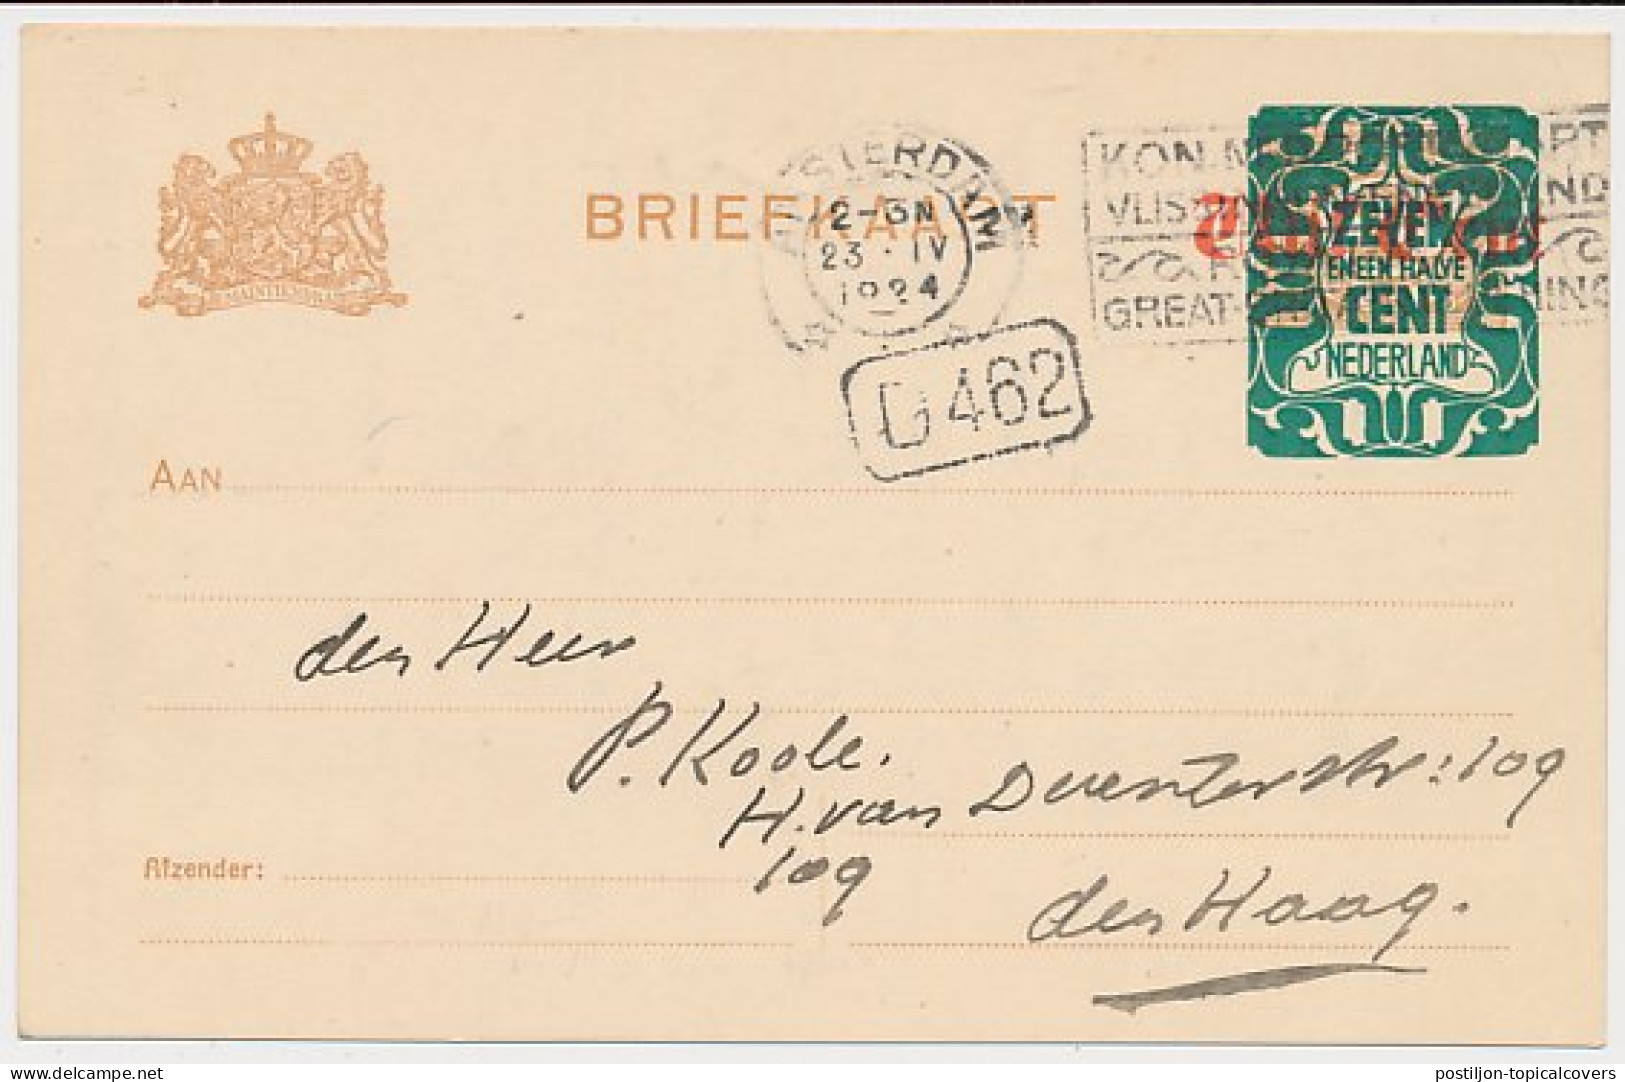 Briefkaart G. 176 A II Amsterdam - S Gravenhage 1924 - Interi Postali